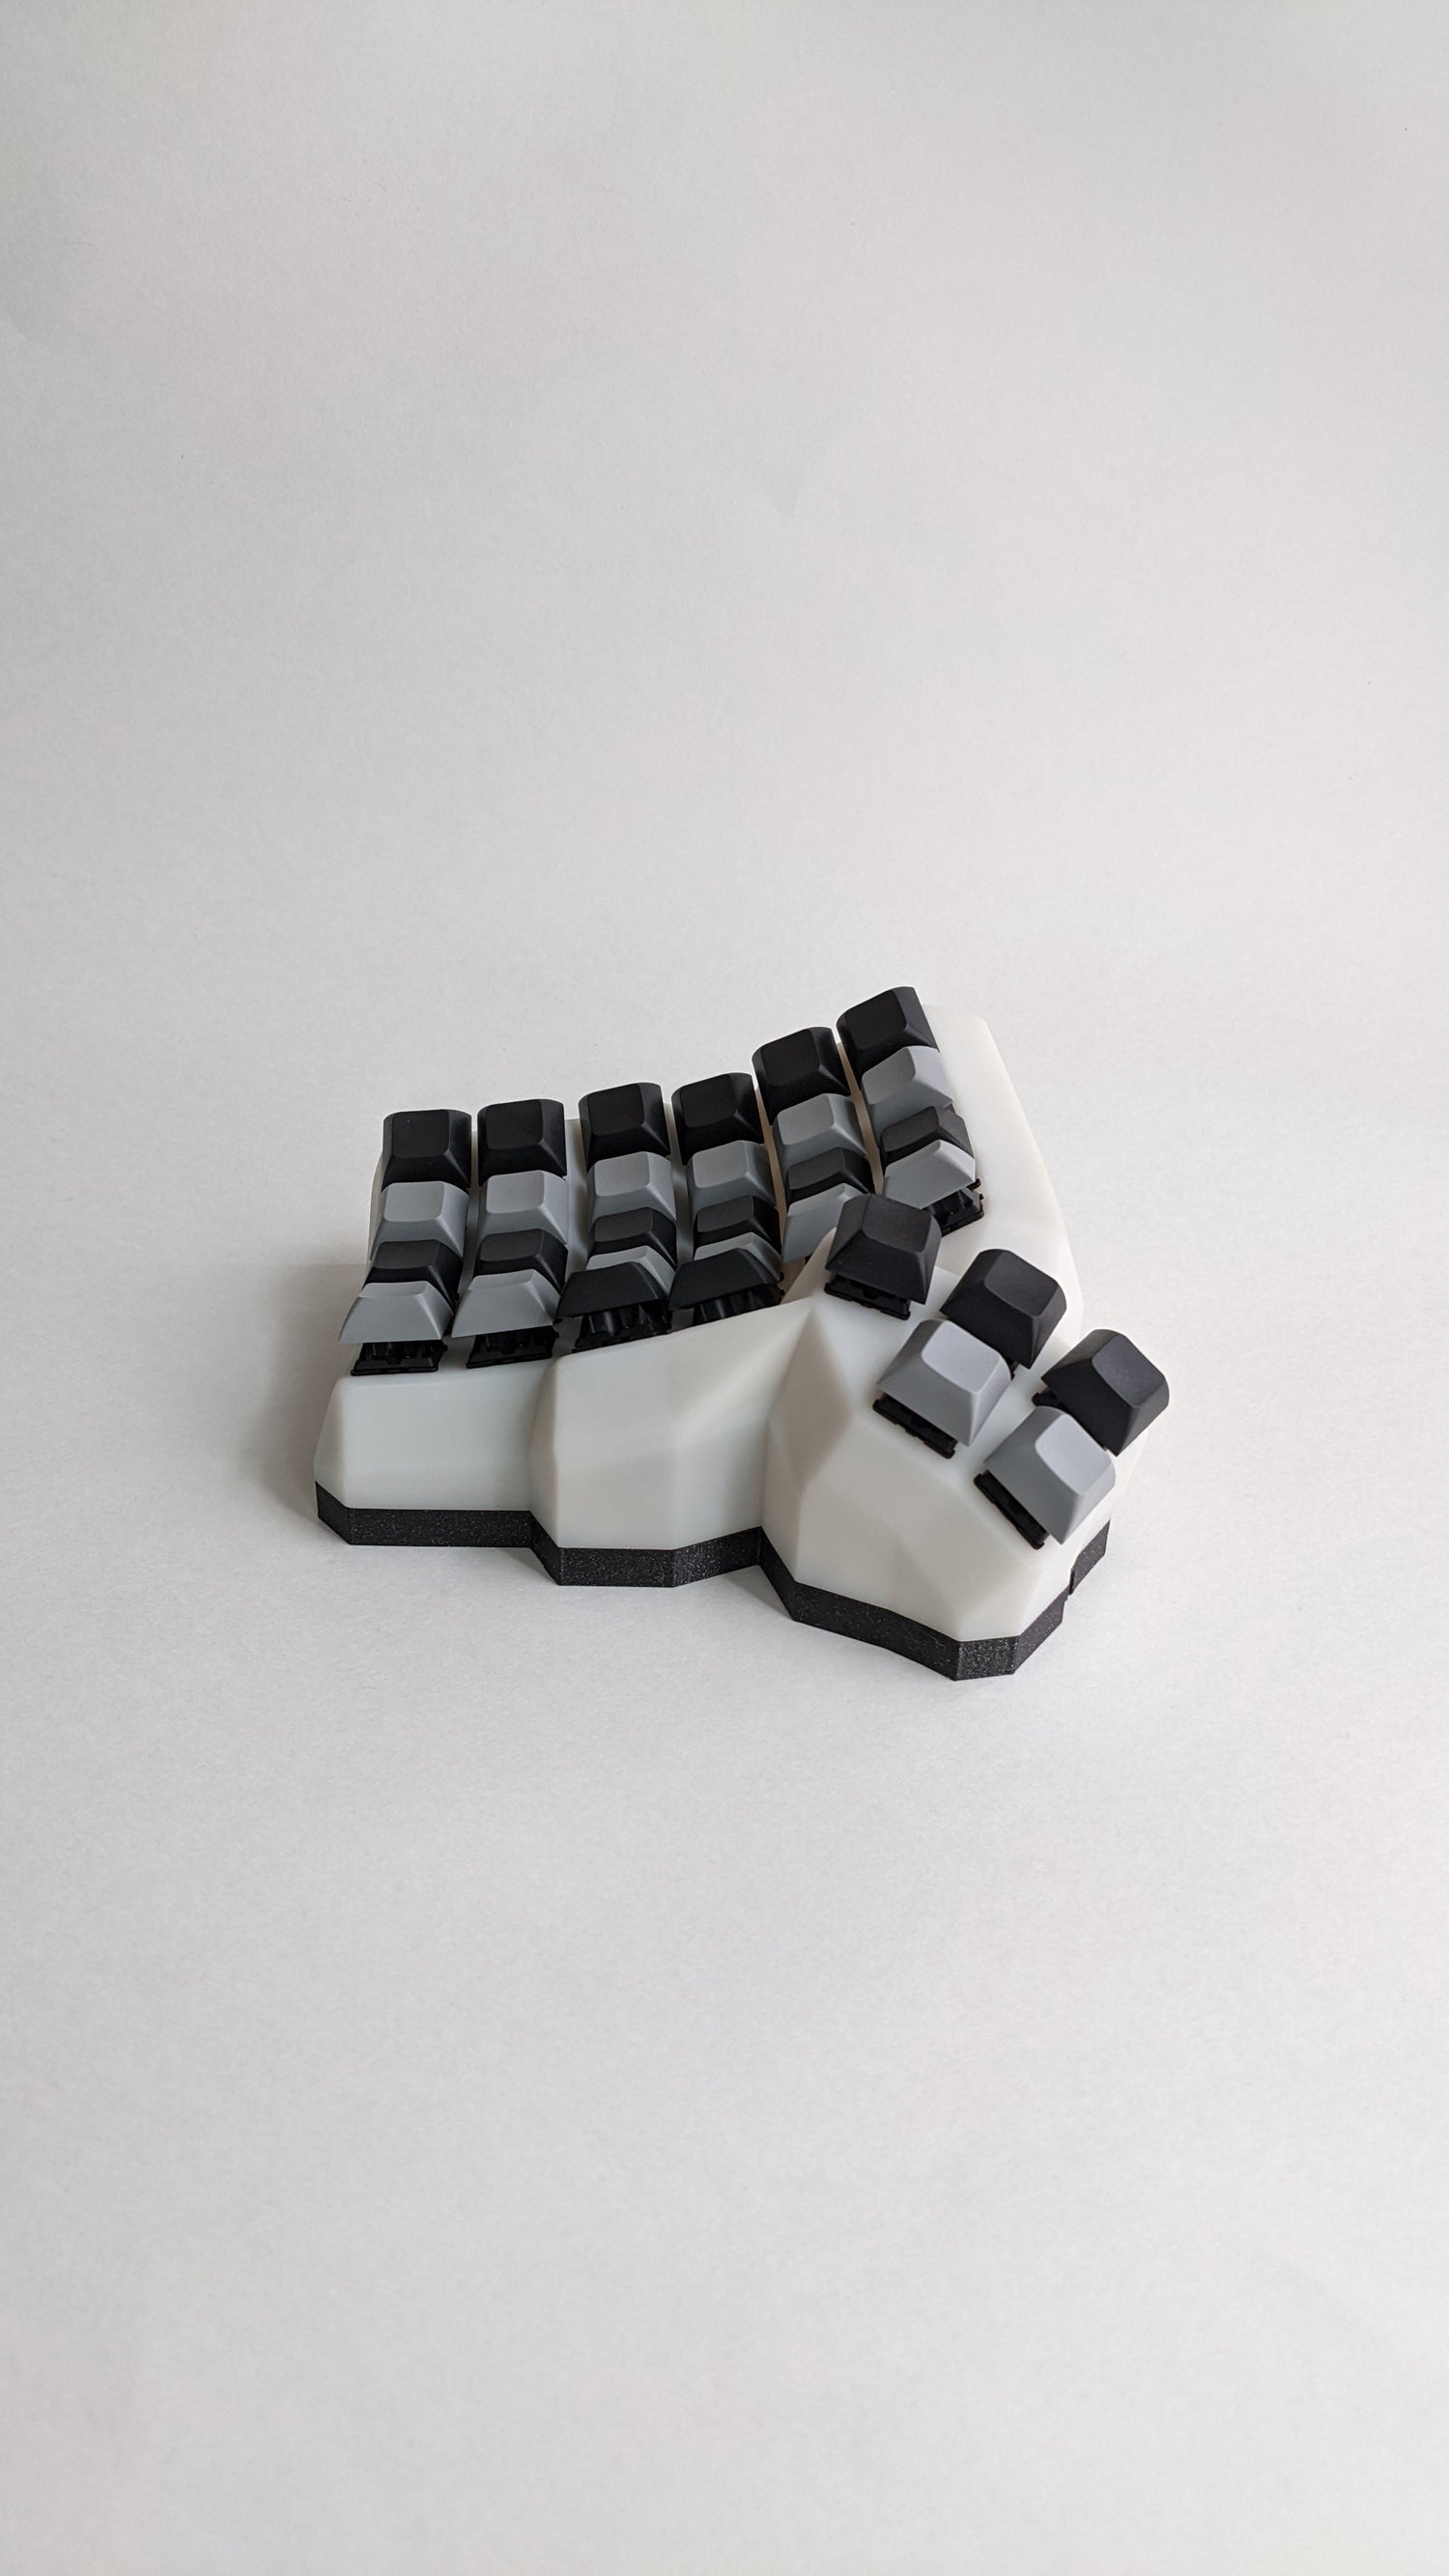 TaikoHub ergonomic split mechanical ortholinear white resin dactyl manuform keyboard